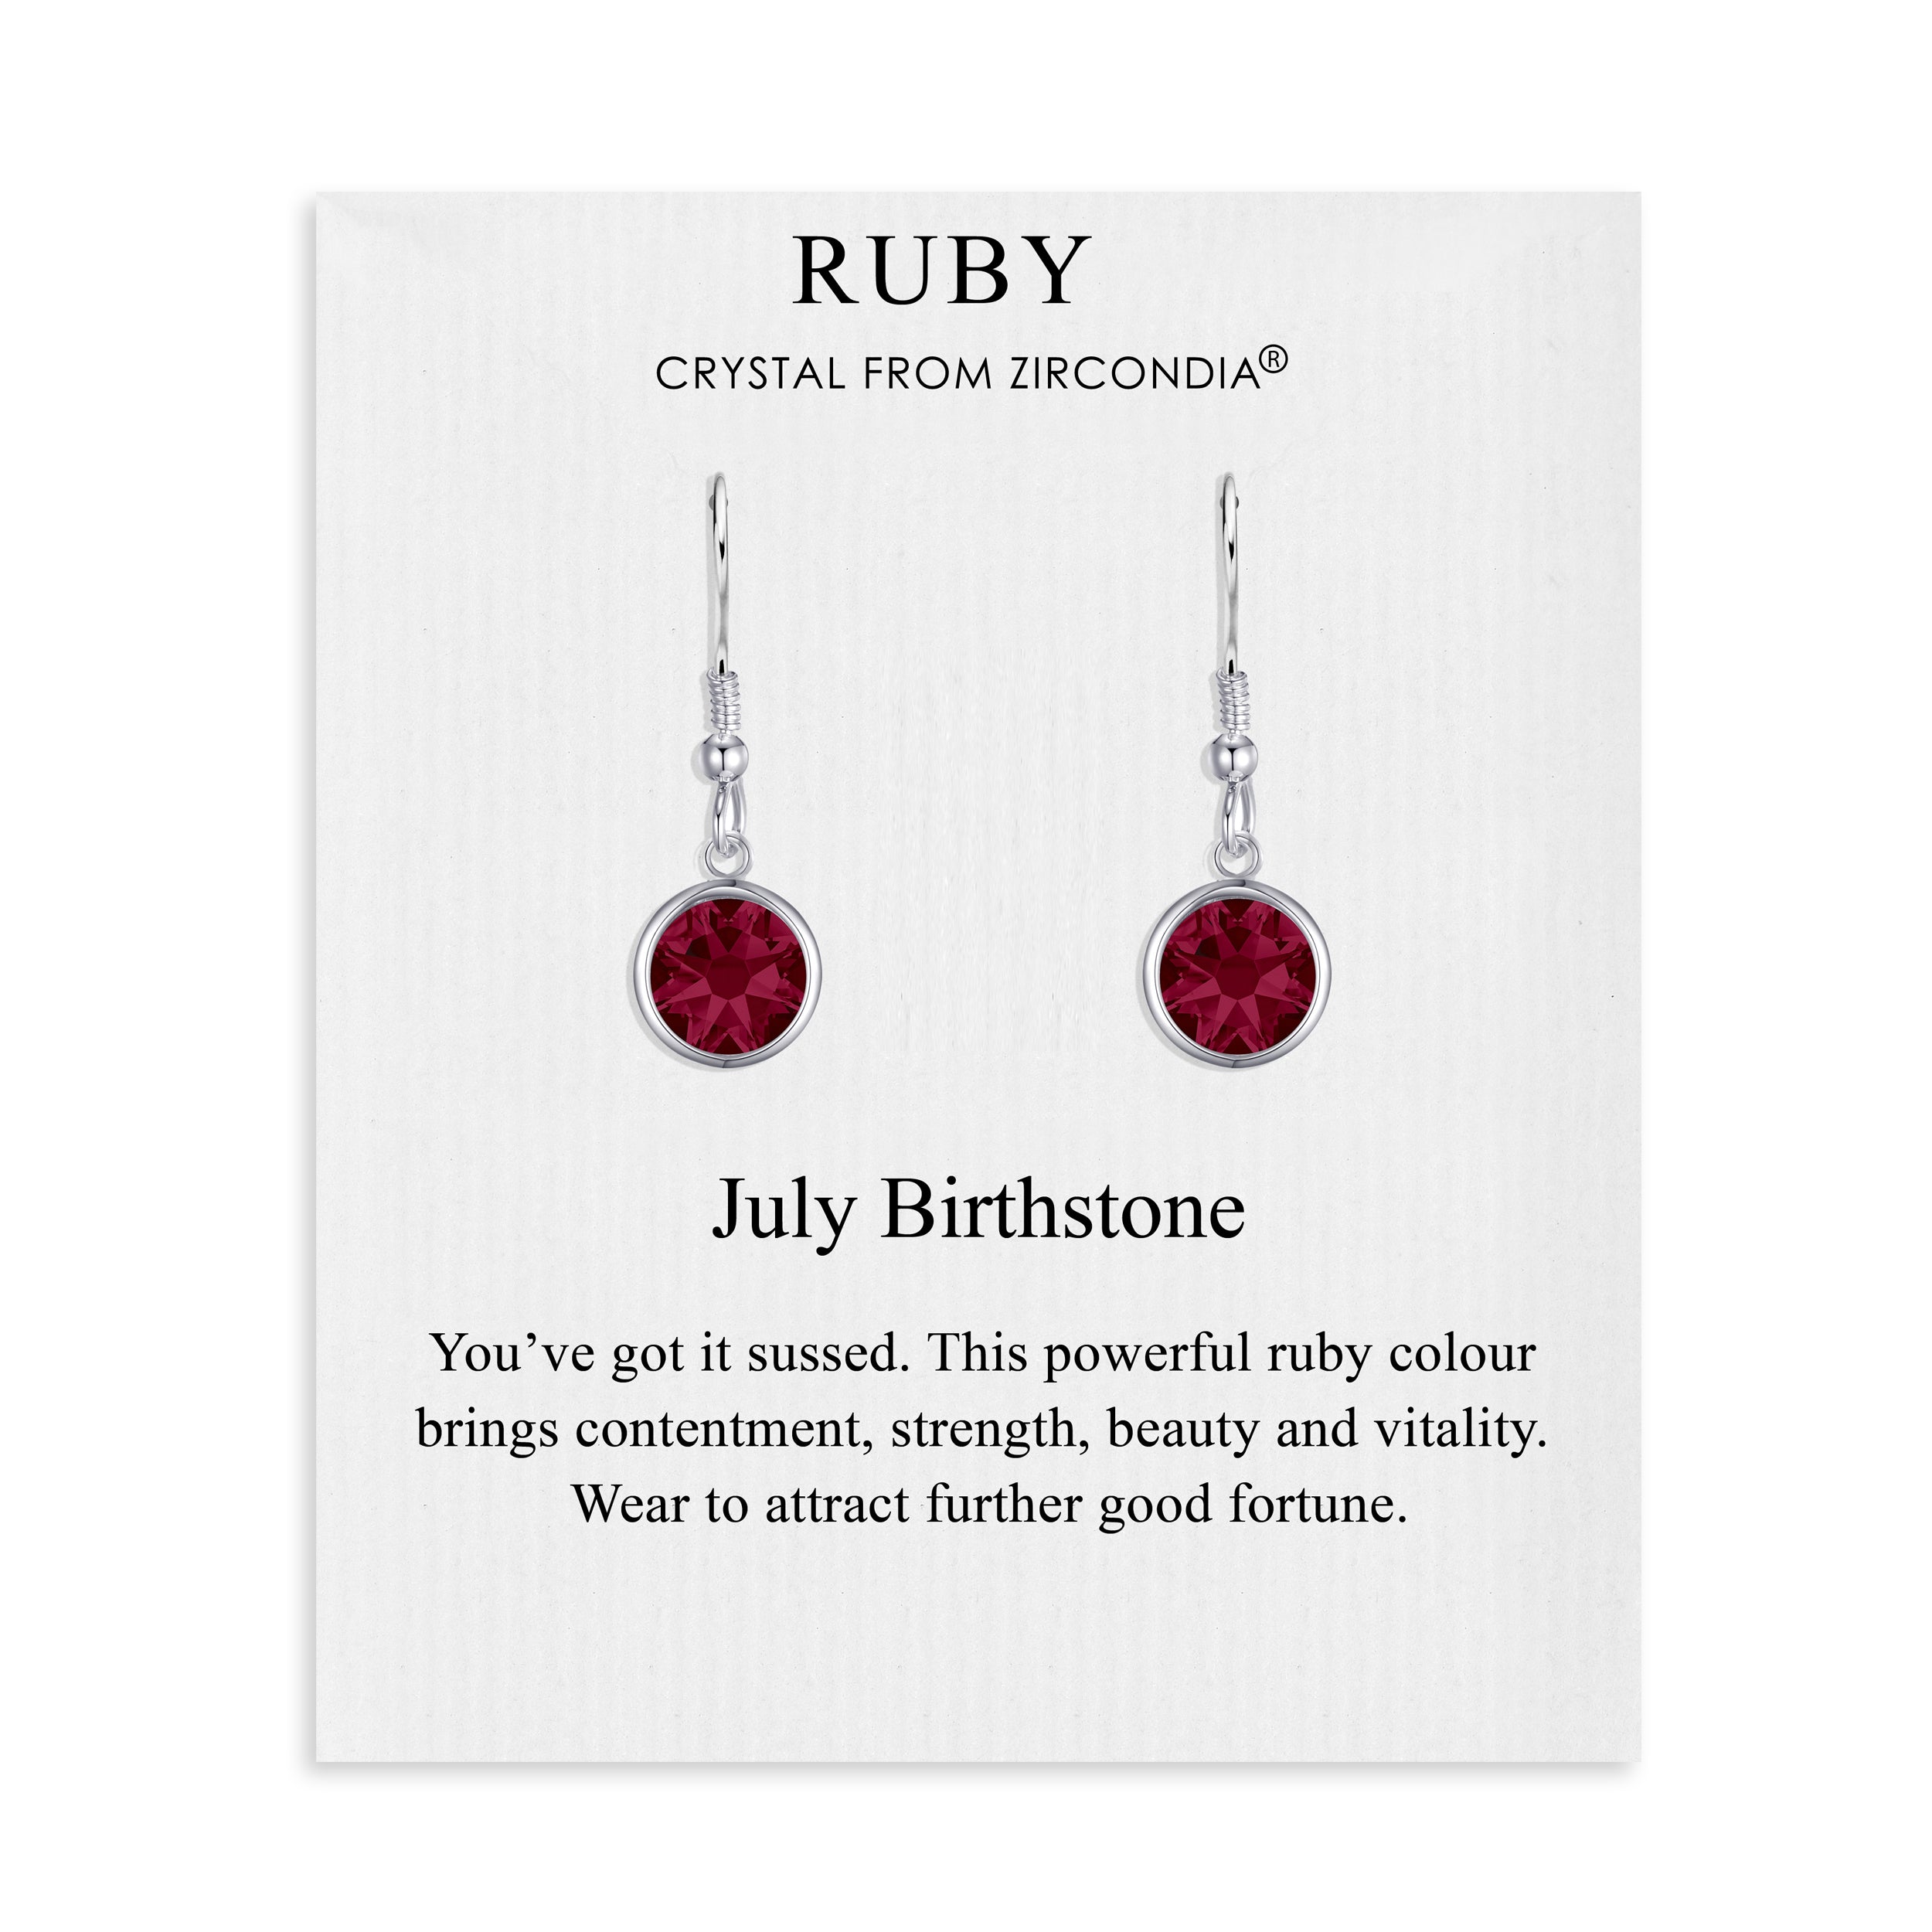 July Birthstone Drop Earrings Created with Ruby Zircondia® Crystals by Philip Jones Jewellery